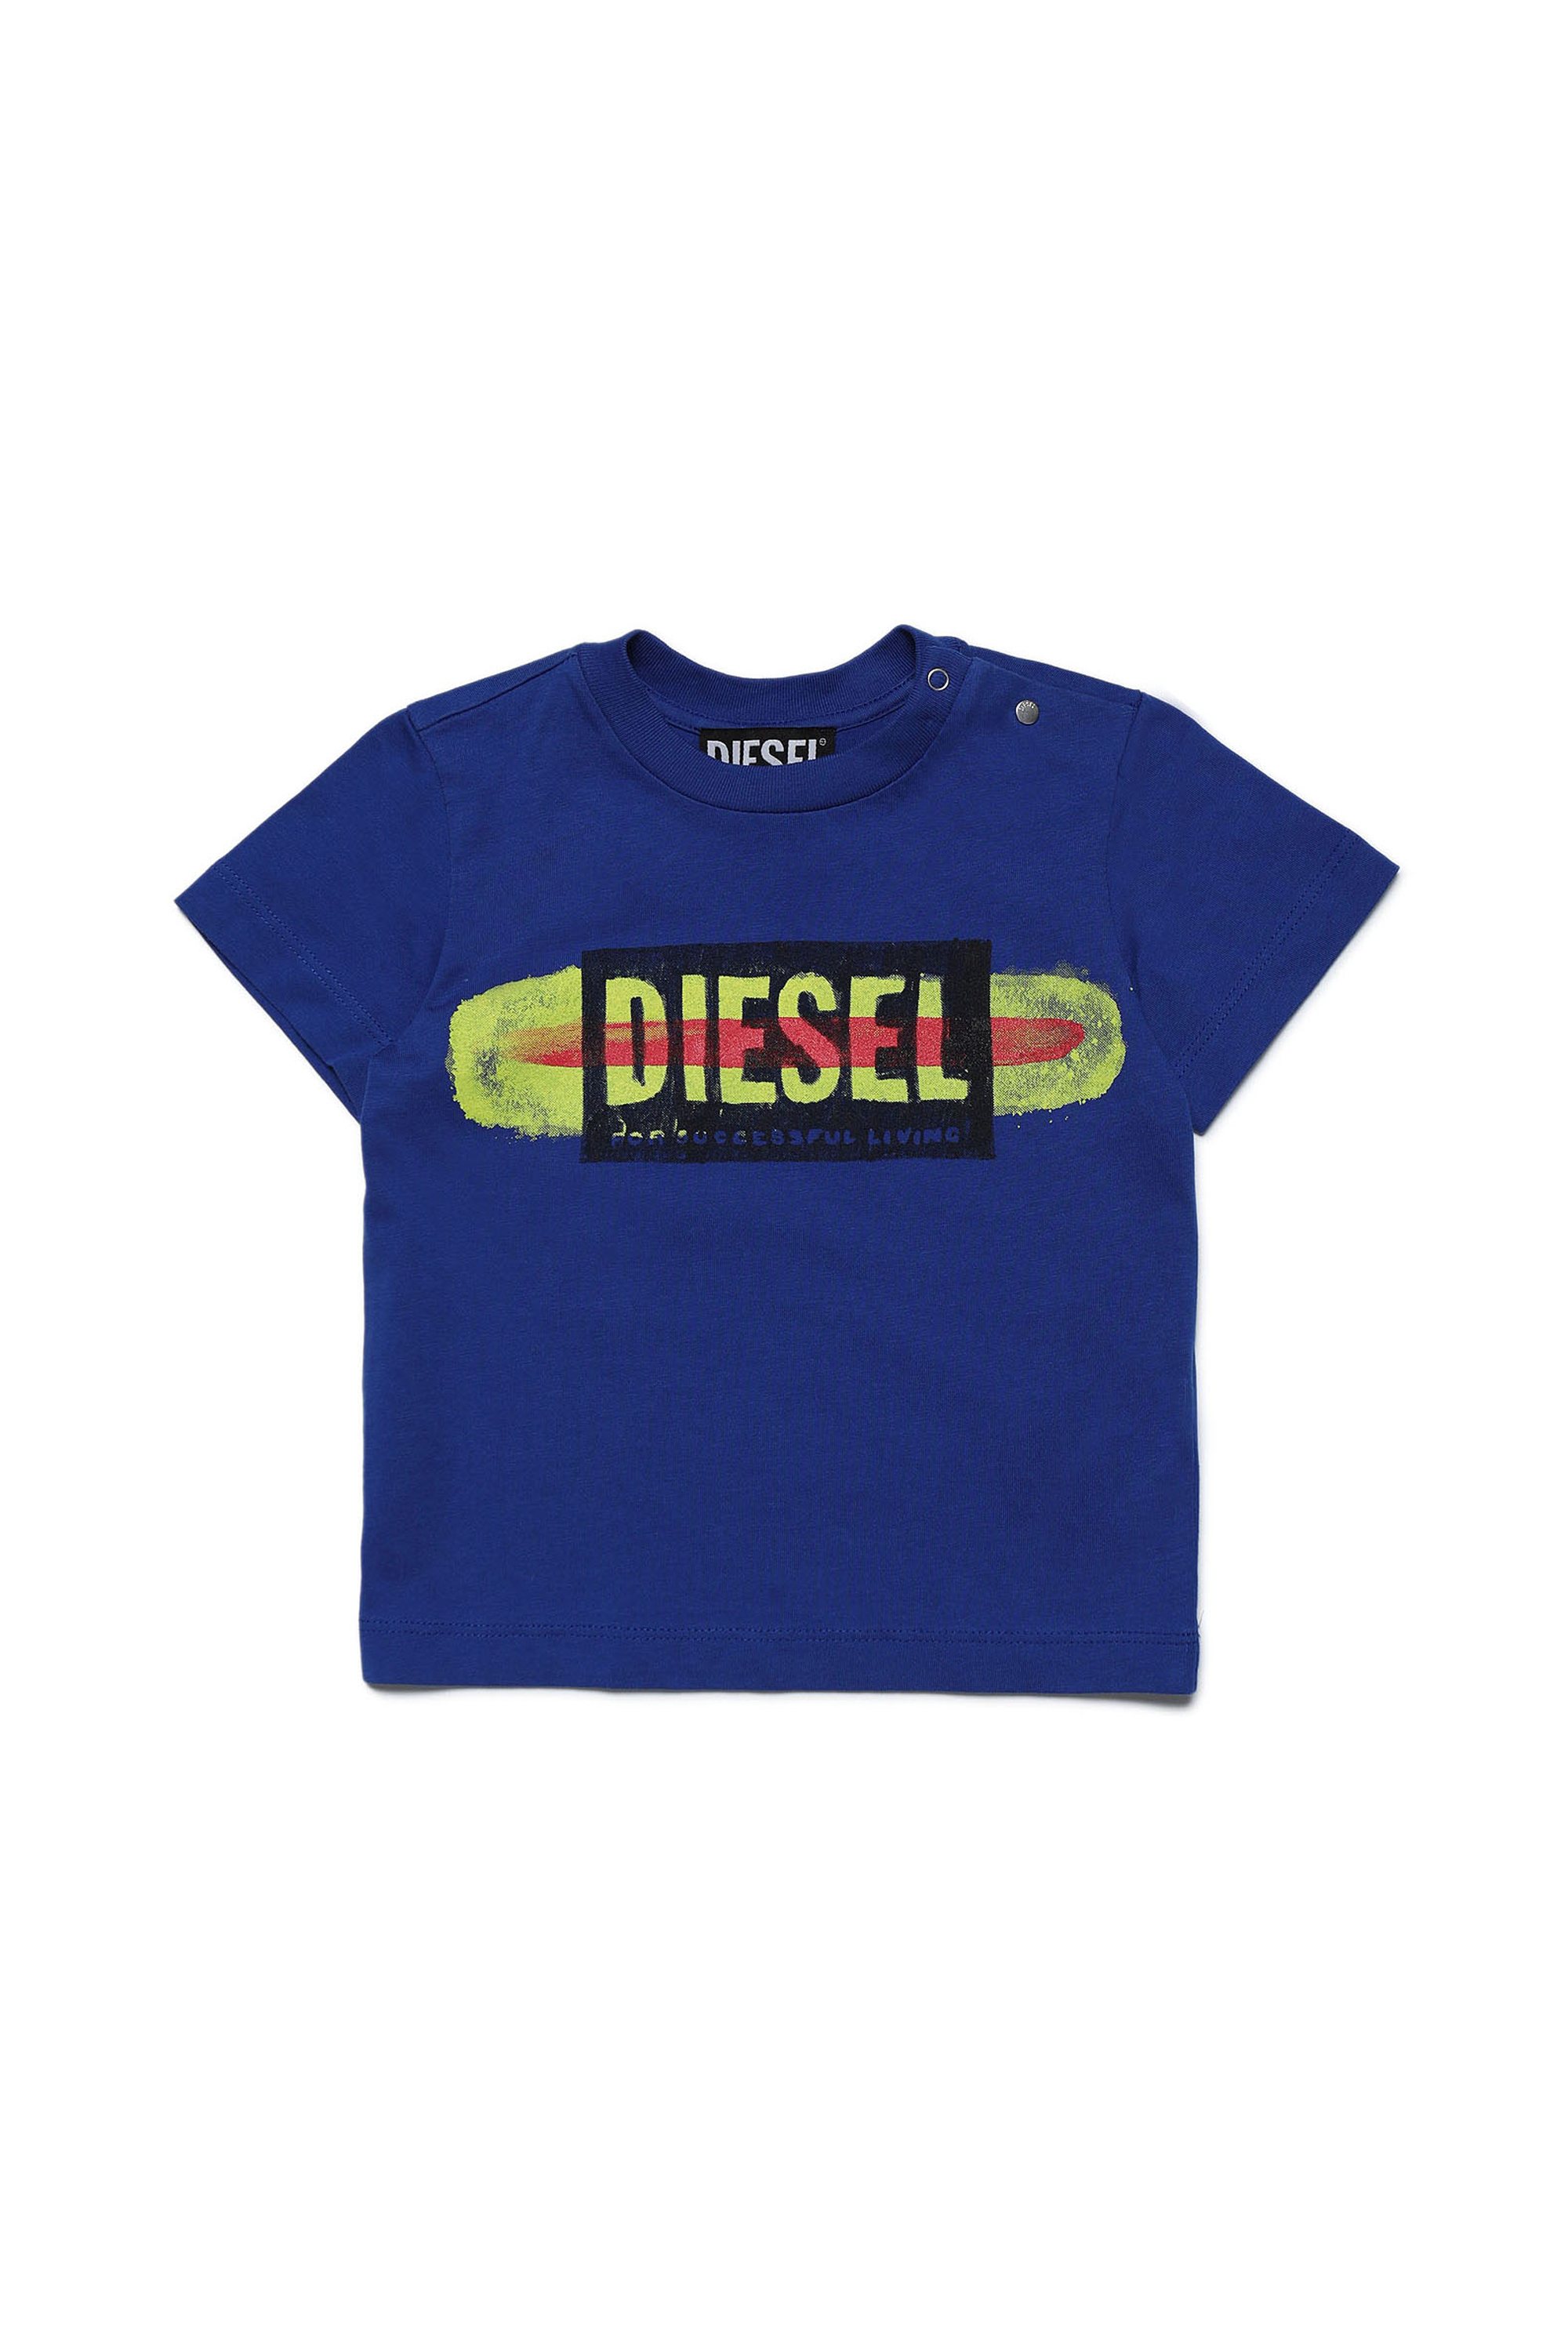 Diesel - TARYB, Blau - Image 1